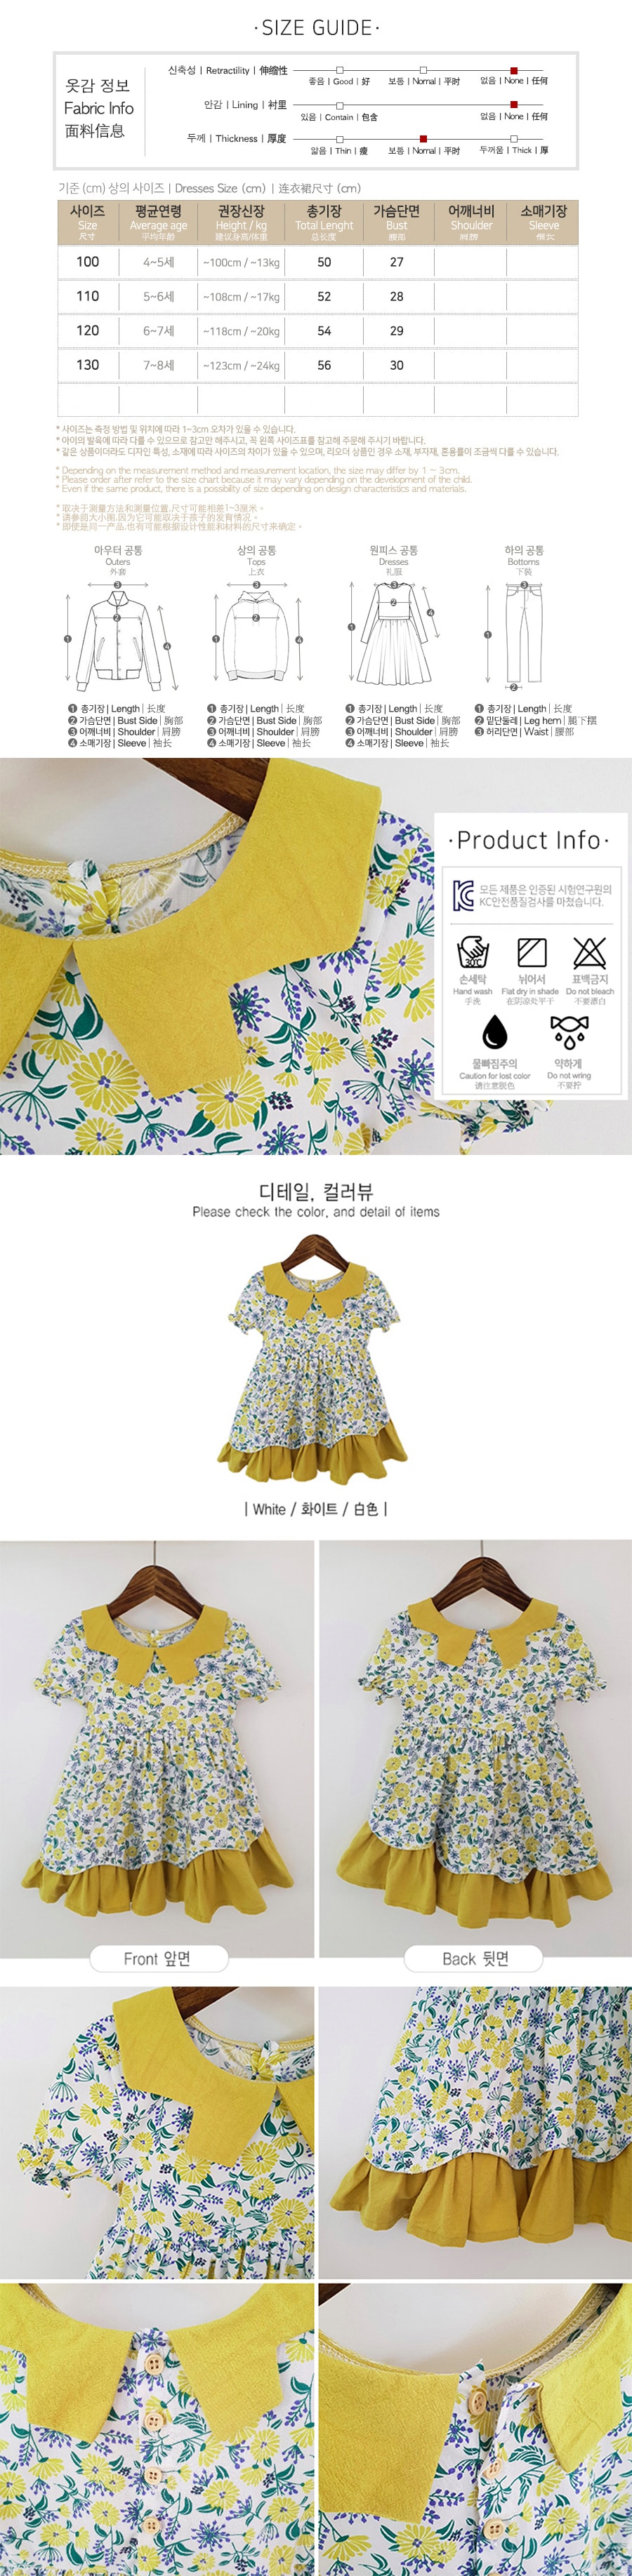 Kid Girl Floral Layered Ruffle Dress #Yellow 130(7-8years)